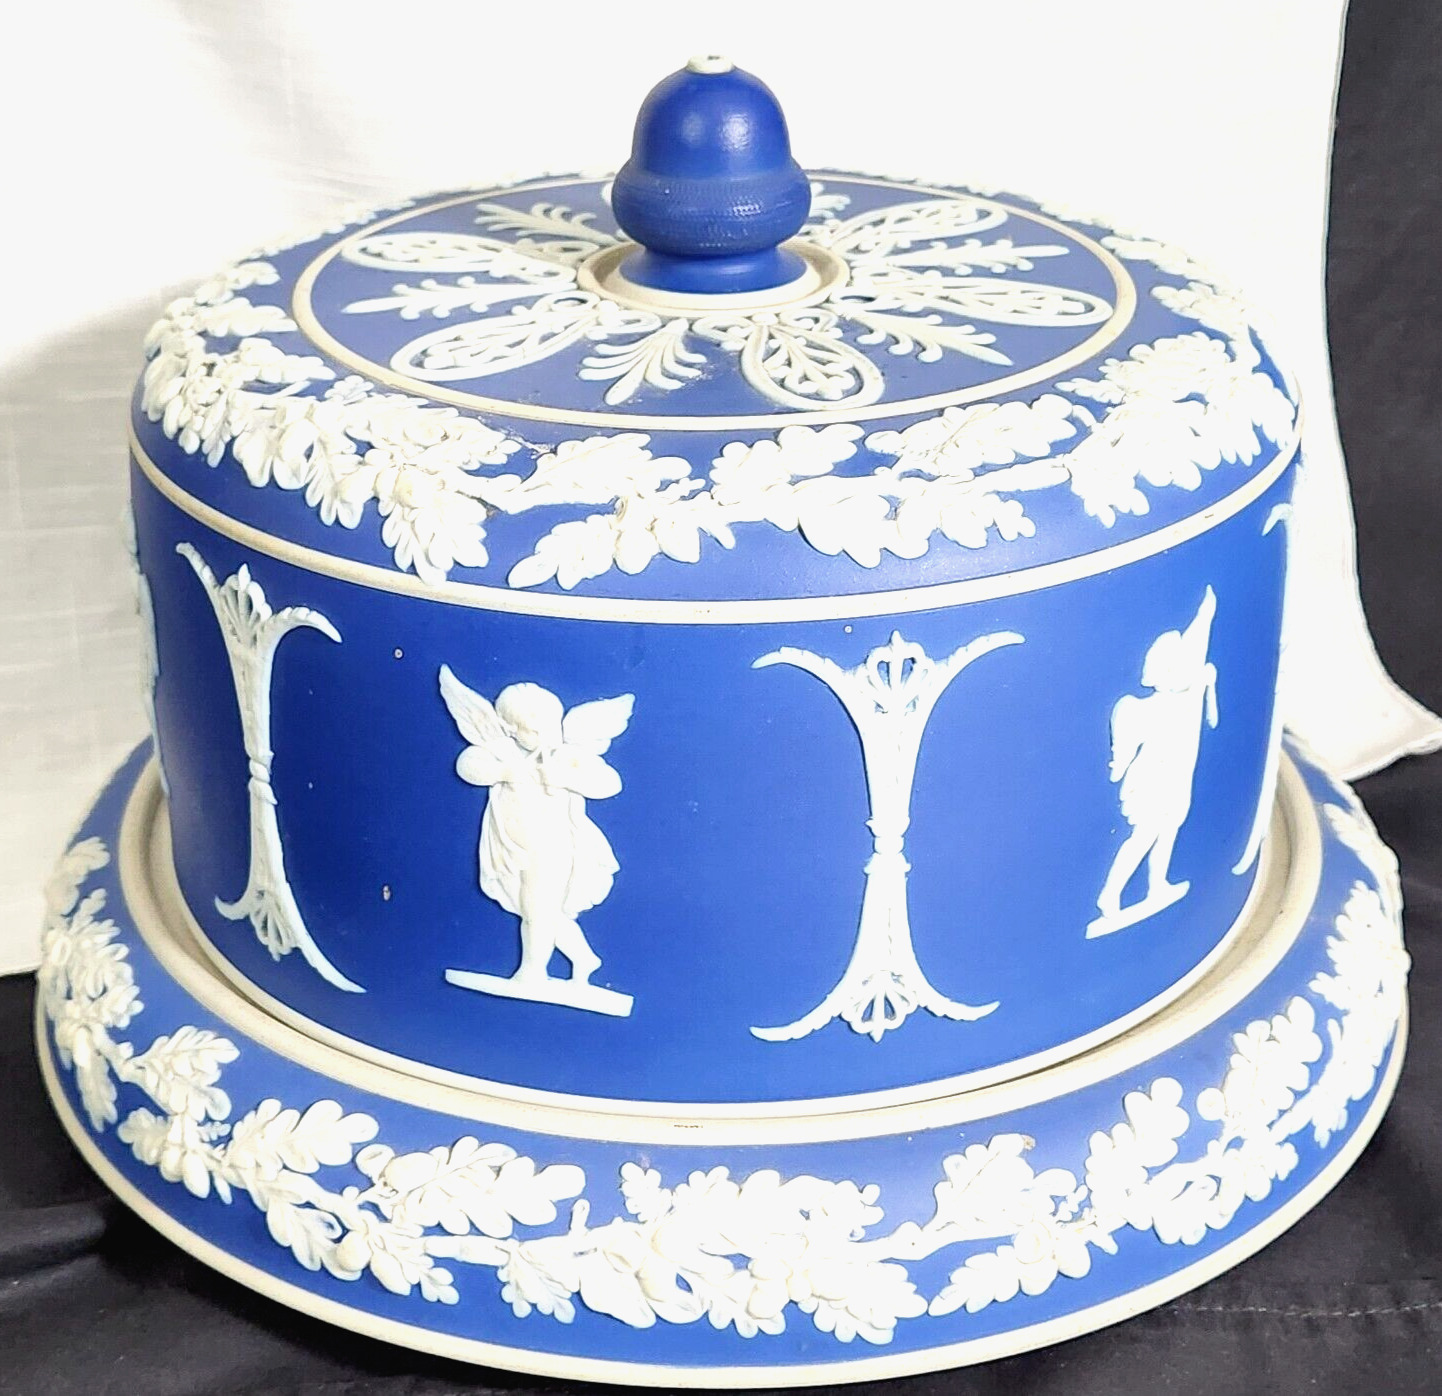 ANTIQUE DUDSON, WEDGWOOD STYLE, DARK BLUE JASPERWARE CAKE PLATE/CHEESE DOME